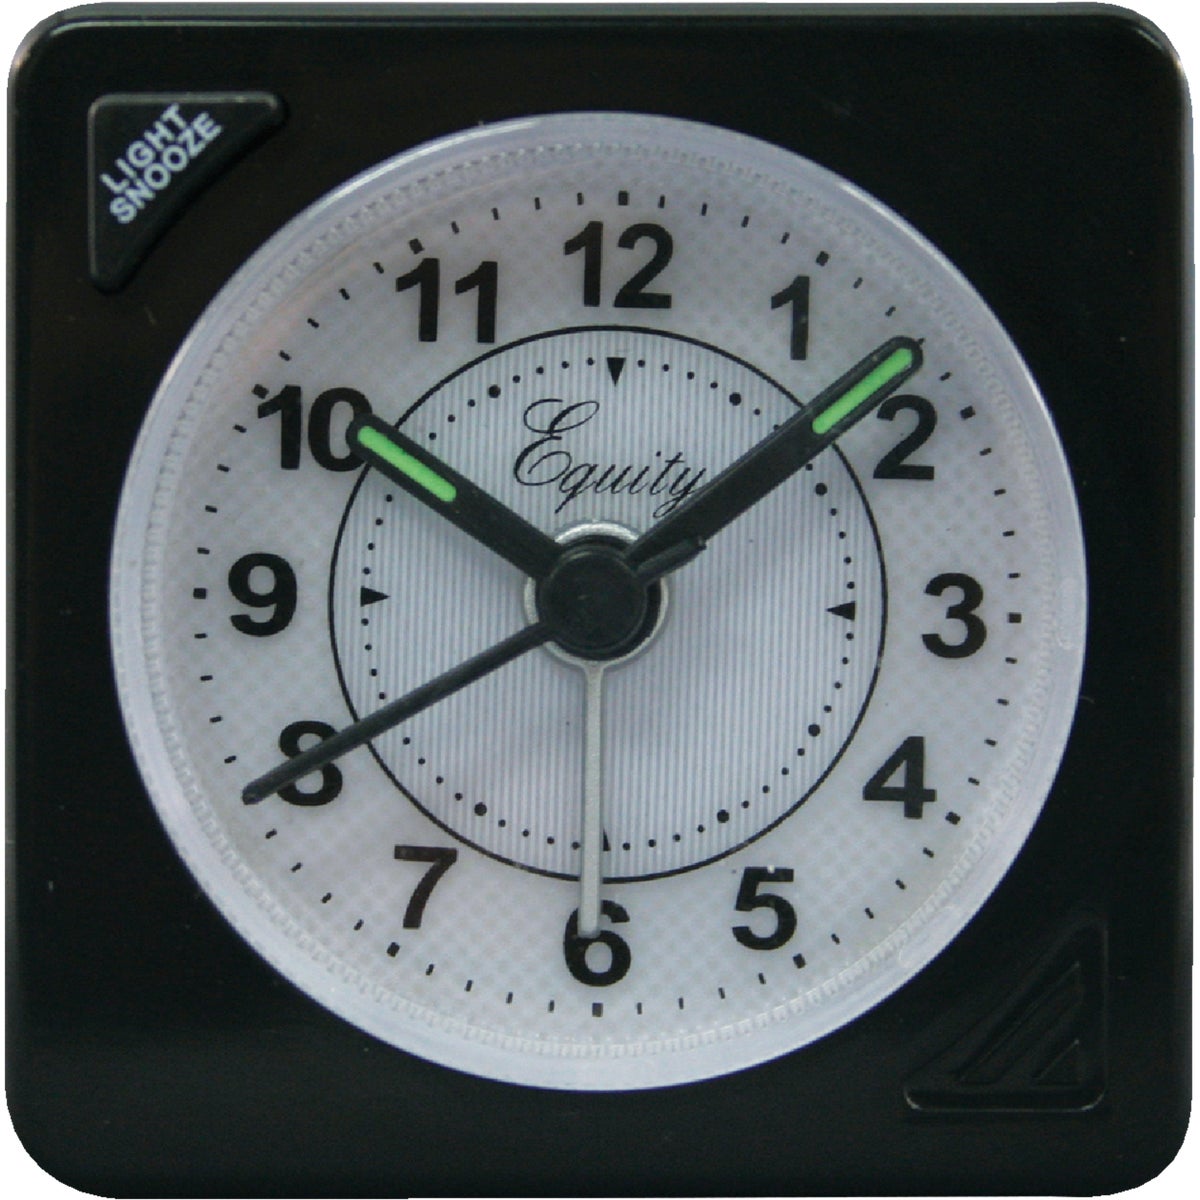 Equity La Crosse Technology 20078 La Crosse Technology Equity Quartz Analog Travel Alarm Clock 20078